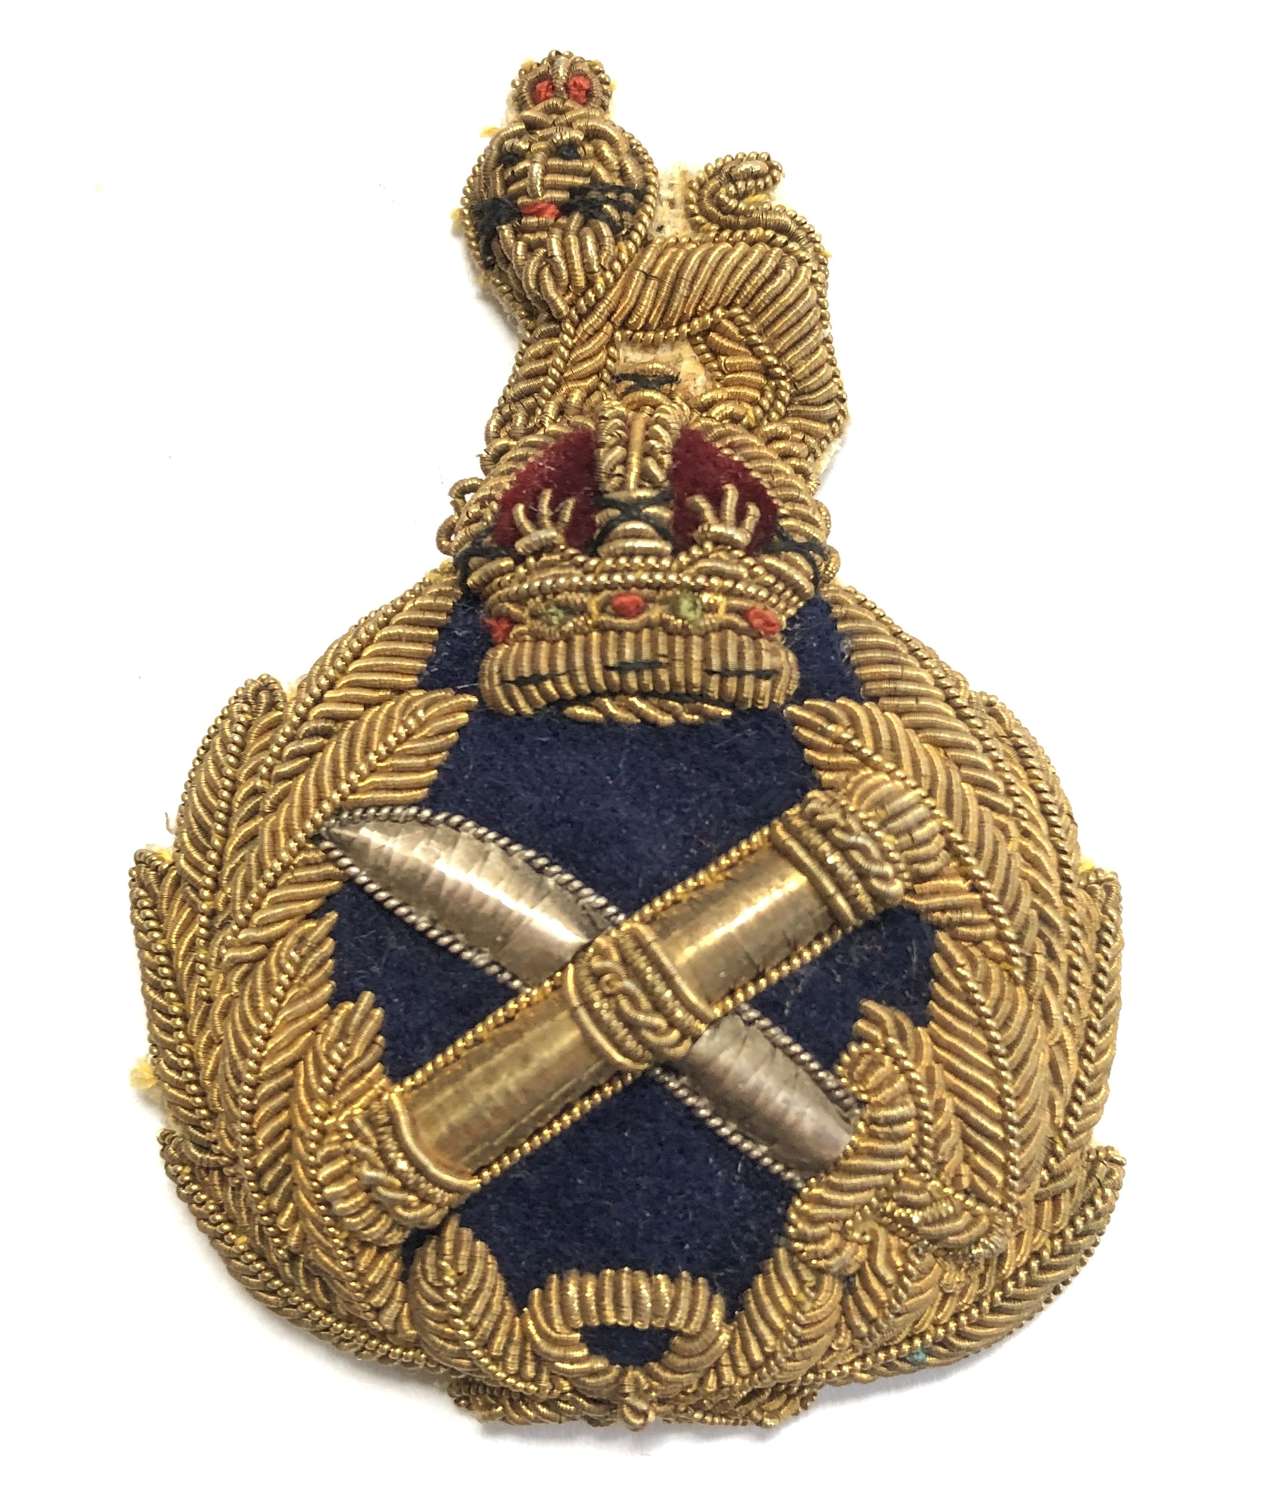 General Officer’s bullion cap badge circa 1901-52